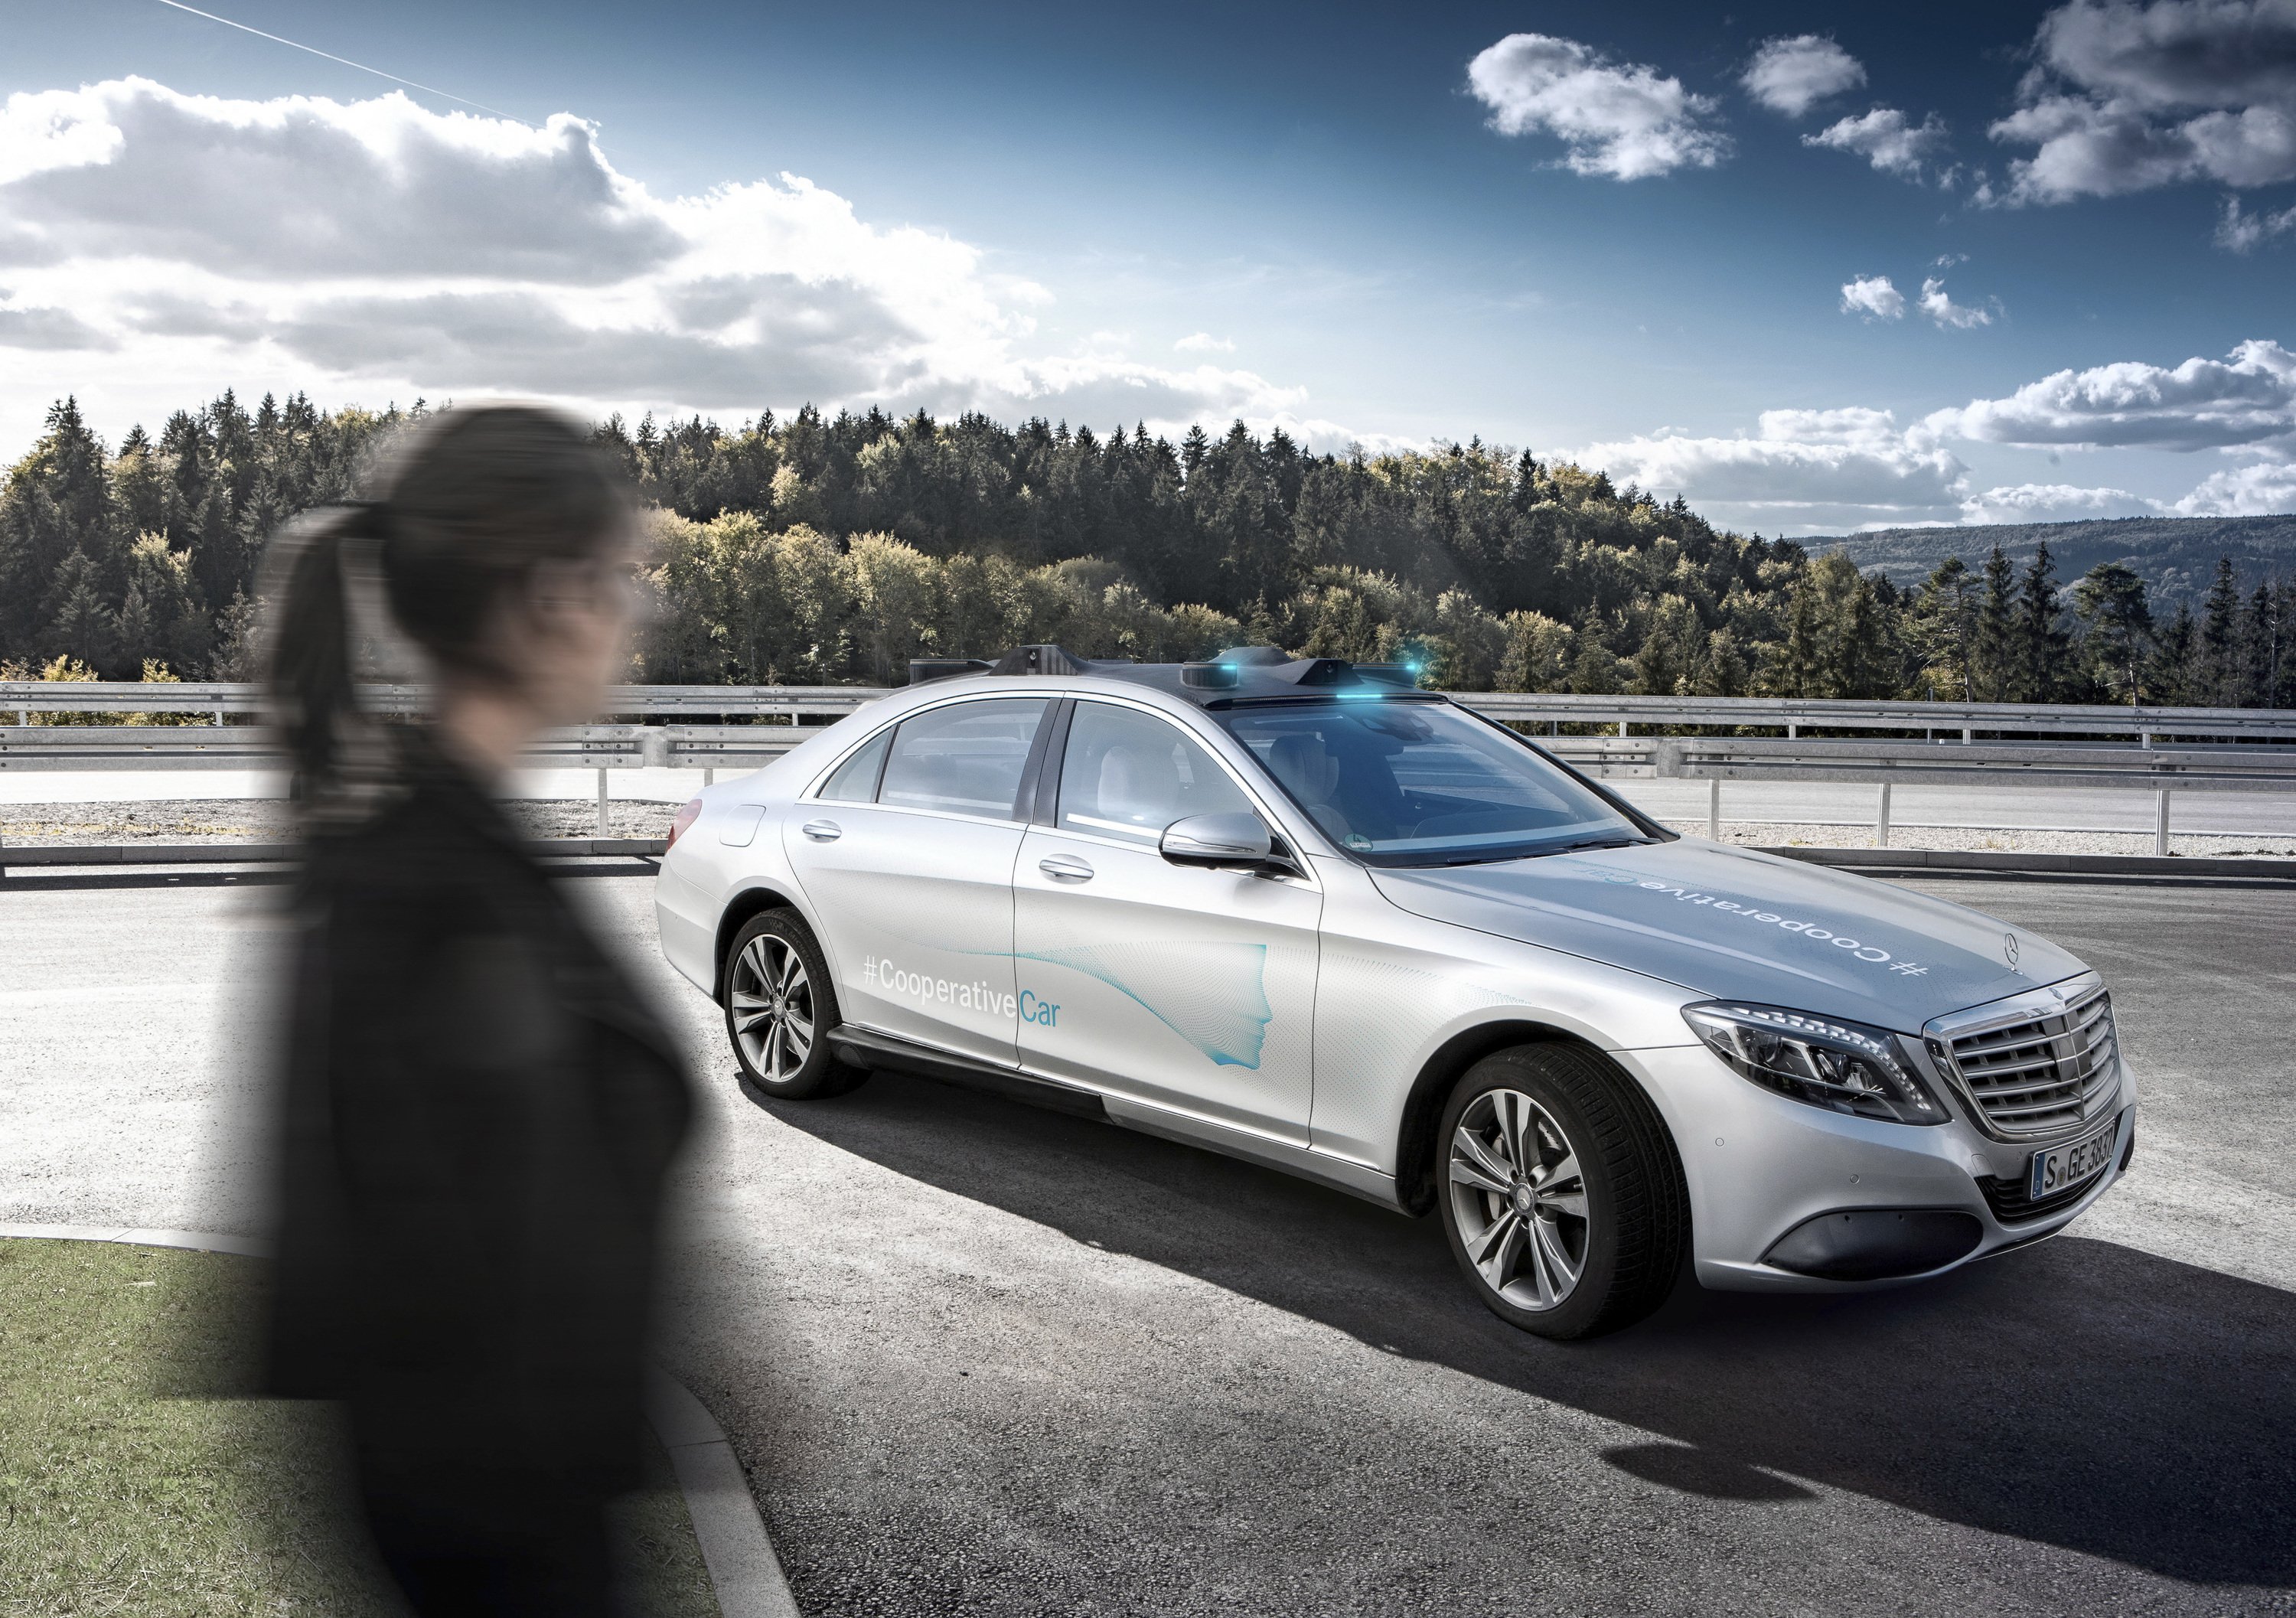 Mercedes Cooperative Car, guida autonoma che interagisce 